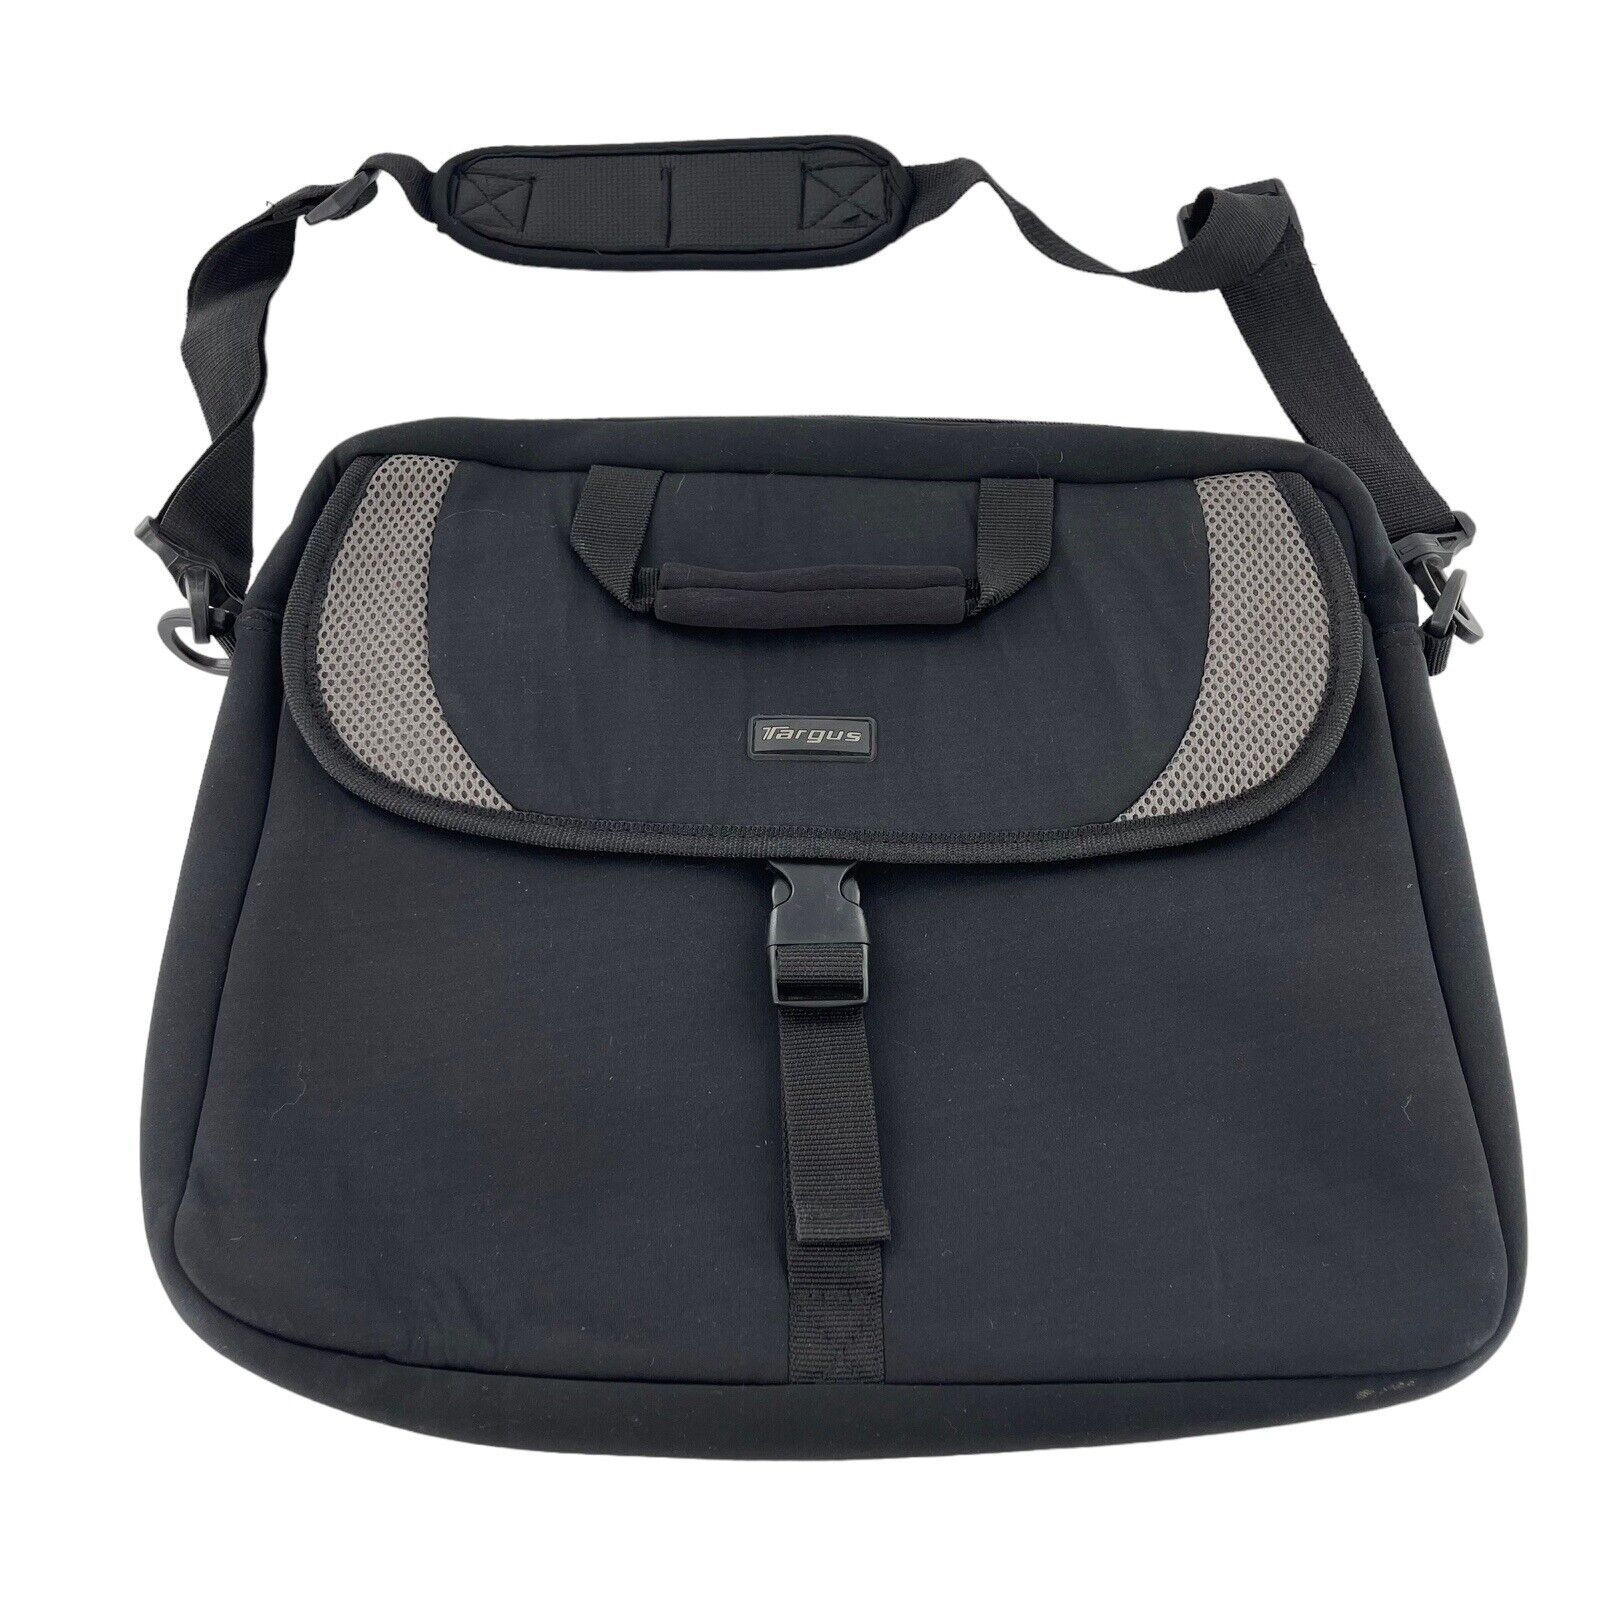 TARGUS Large Black Nylon Padded Laptop Messenger Bag Briefcase pocket gray 15x12